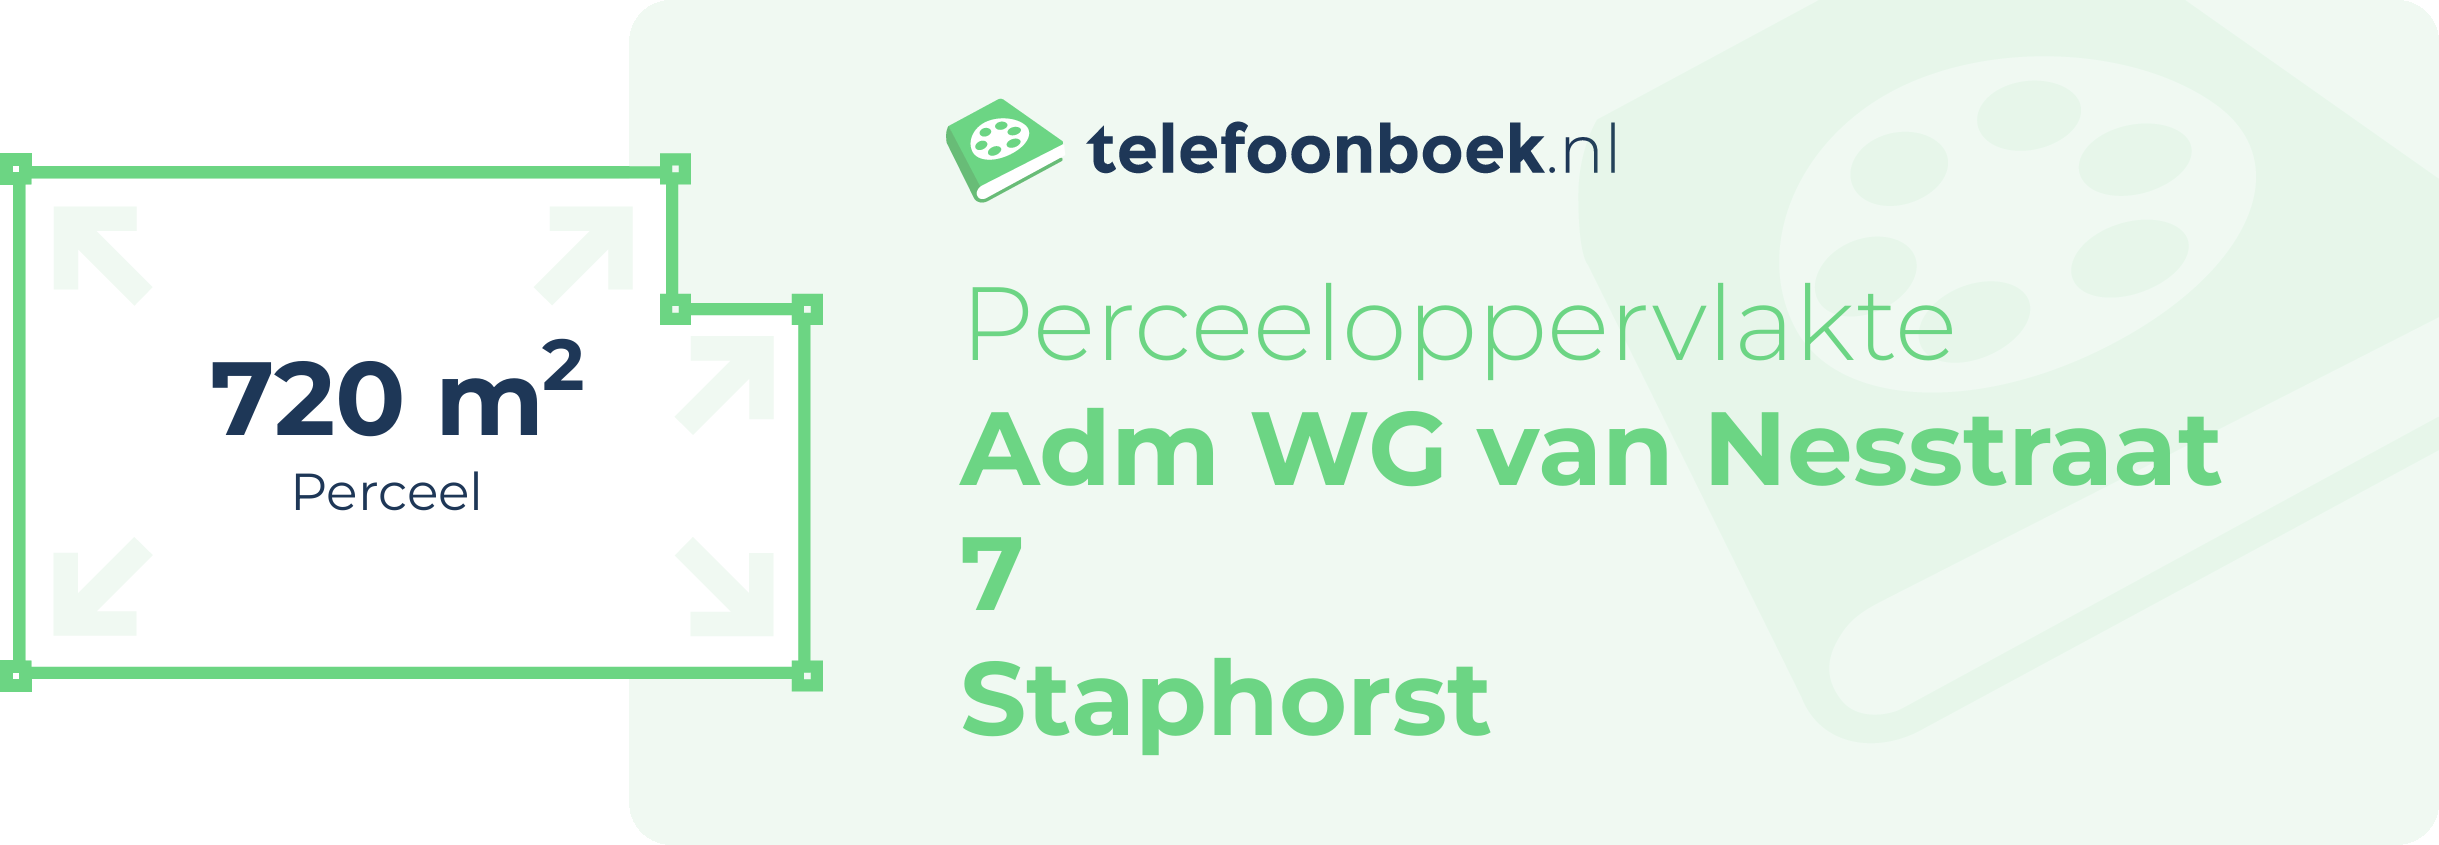 Perceeloppervlakte Adm WG Van Nesstraat 7 Staphorst